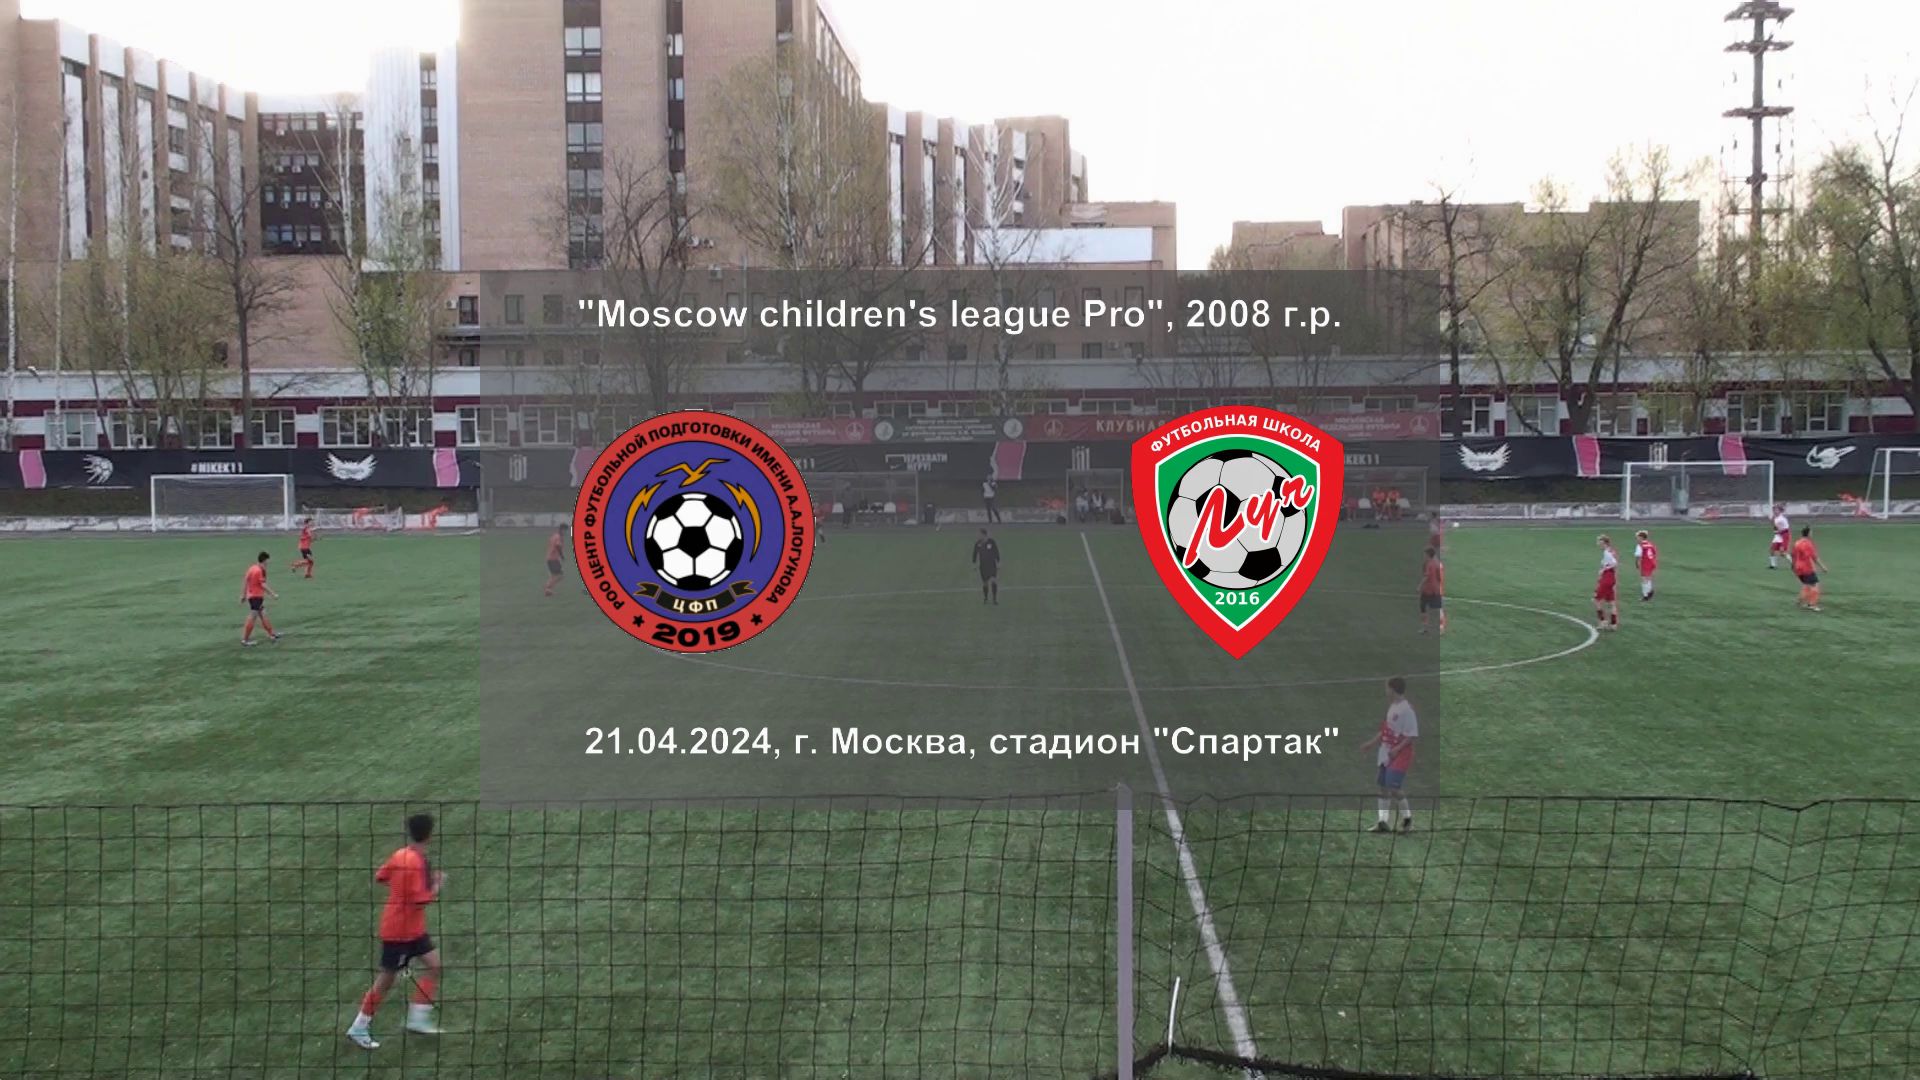 21.04.2024, "Moscow children's league Pro", 2008 г.р., г. Москва, , ЦФП "Логунова" - ФШ "Луч".